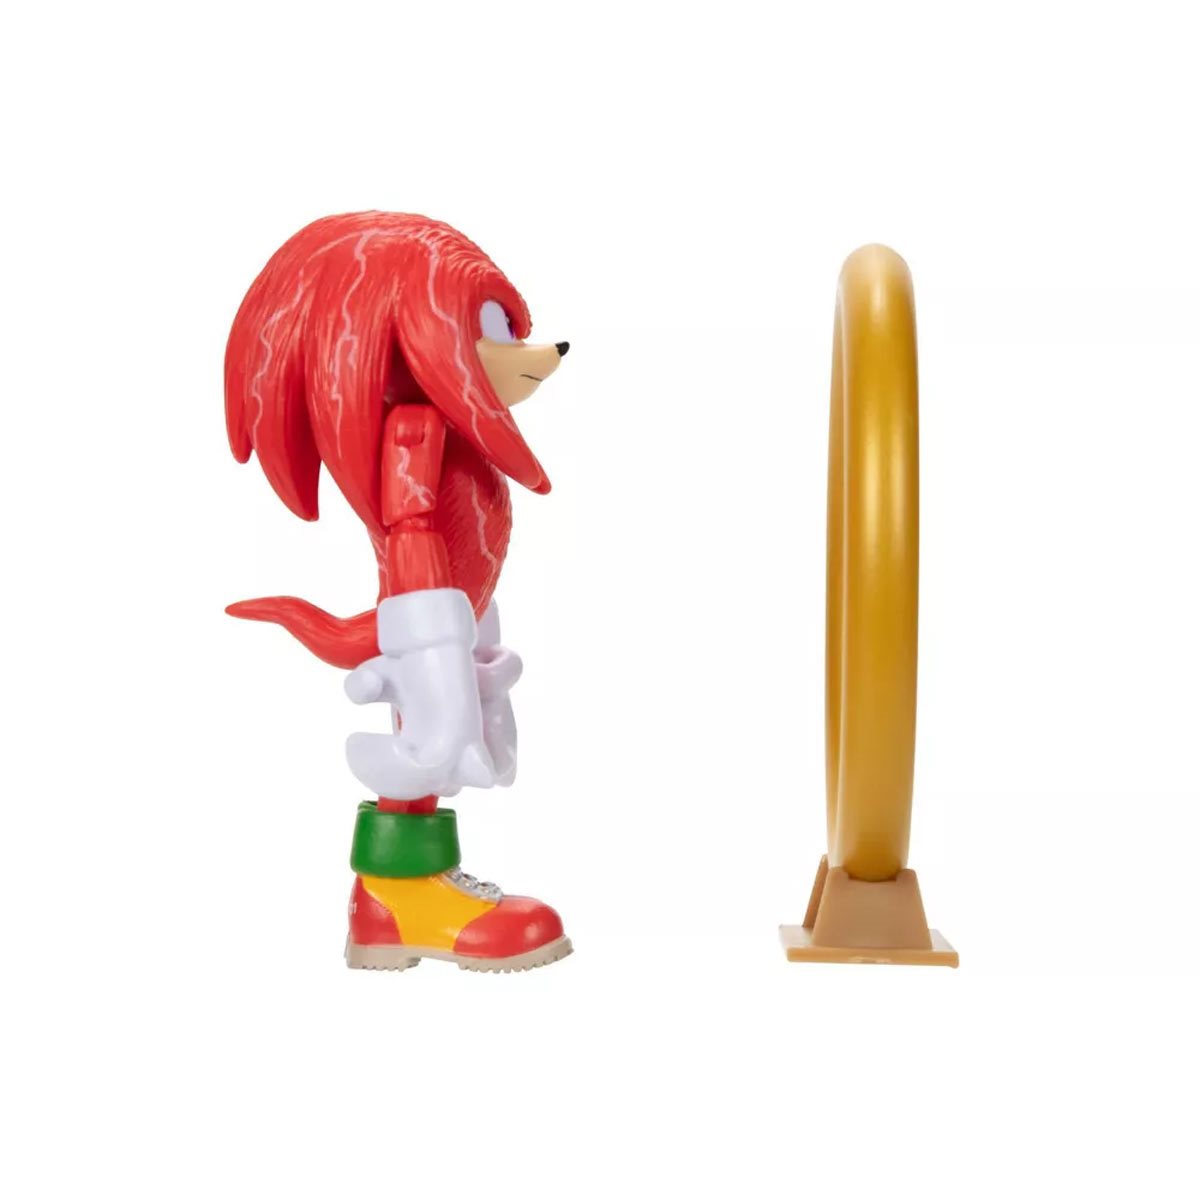 Sonic the Hedgehog Knuckles Action Figure Set, 2 Pieces 